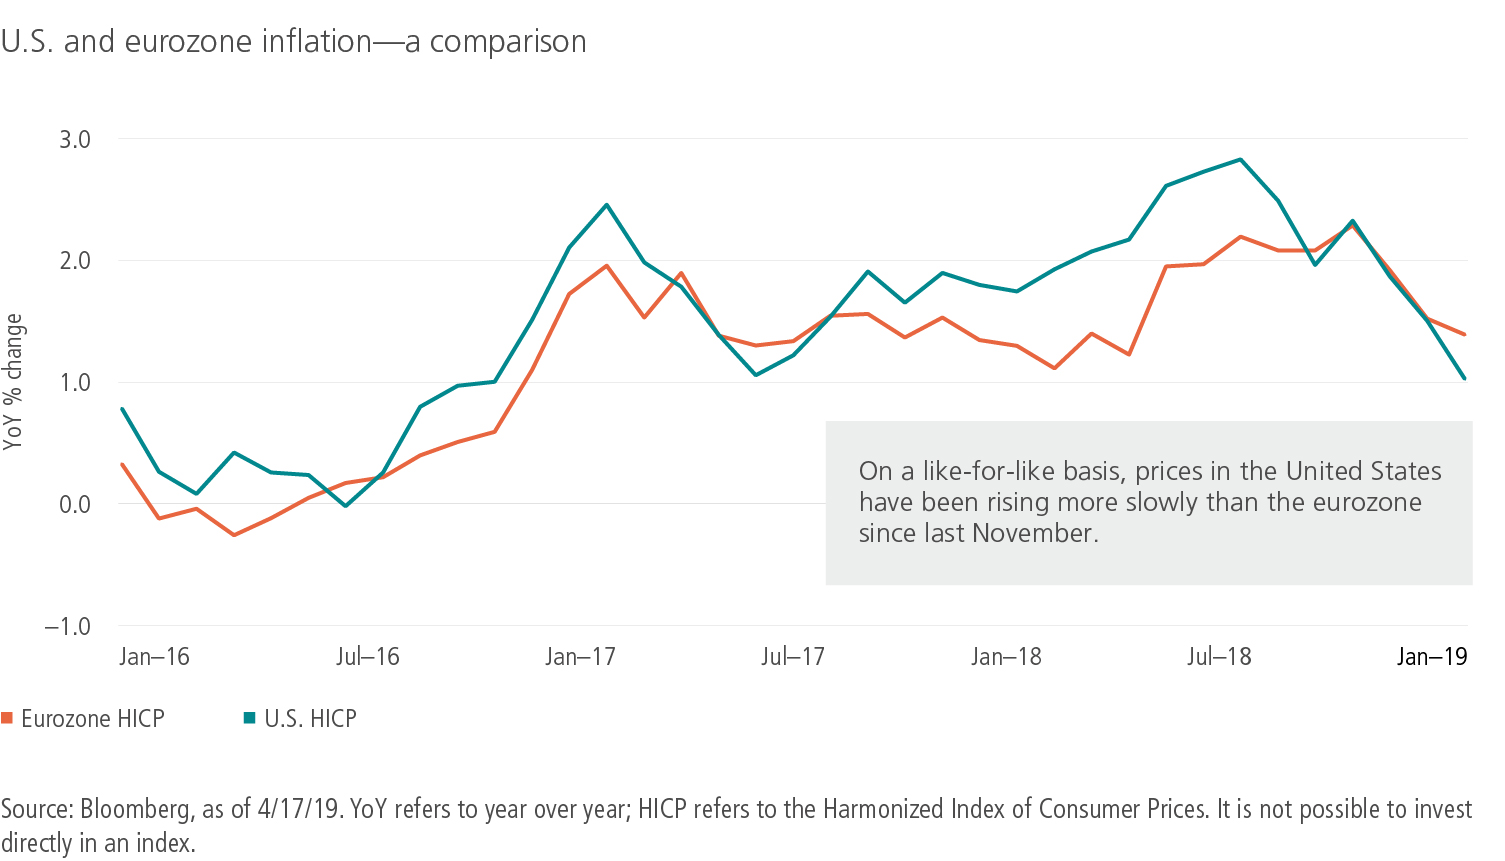 U.S. and eurozone inflation: a comparison